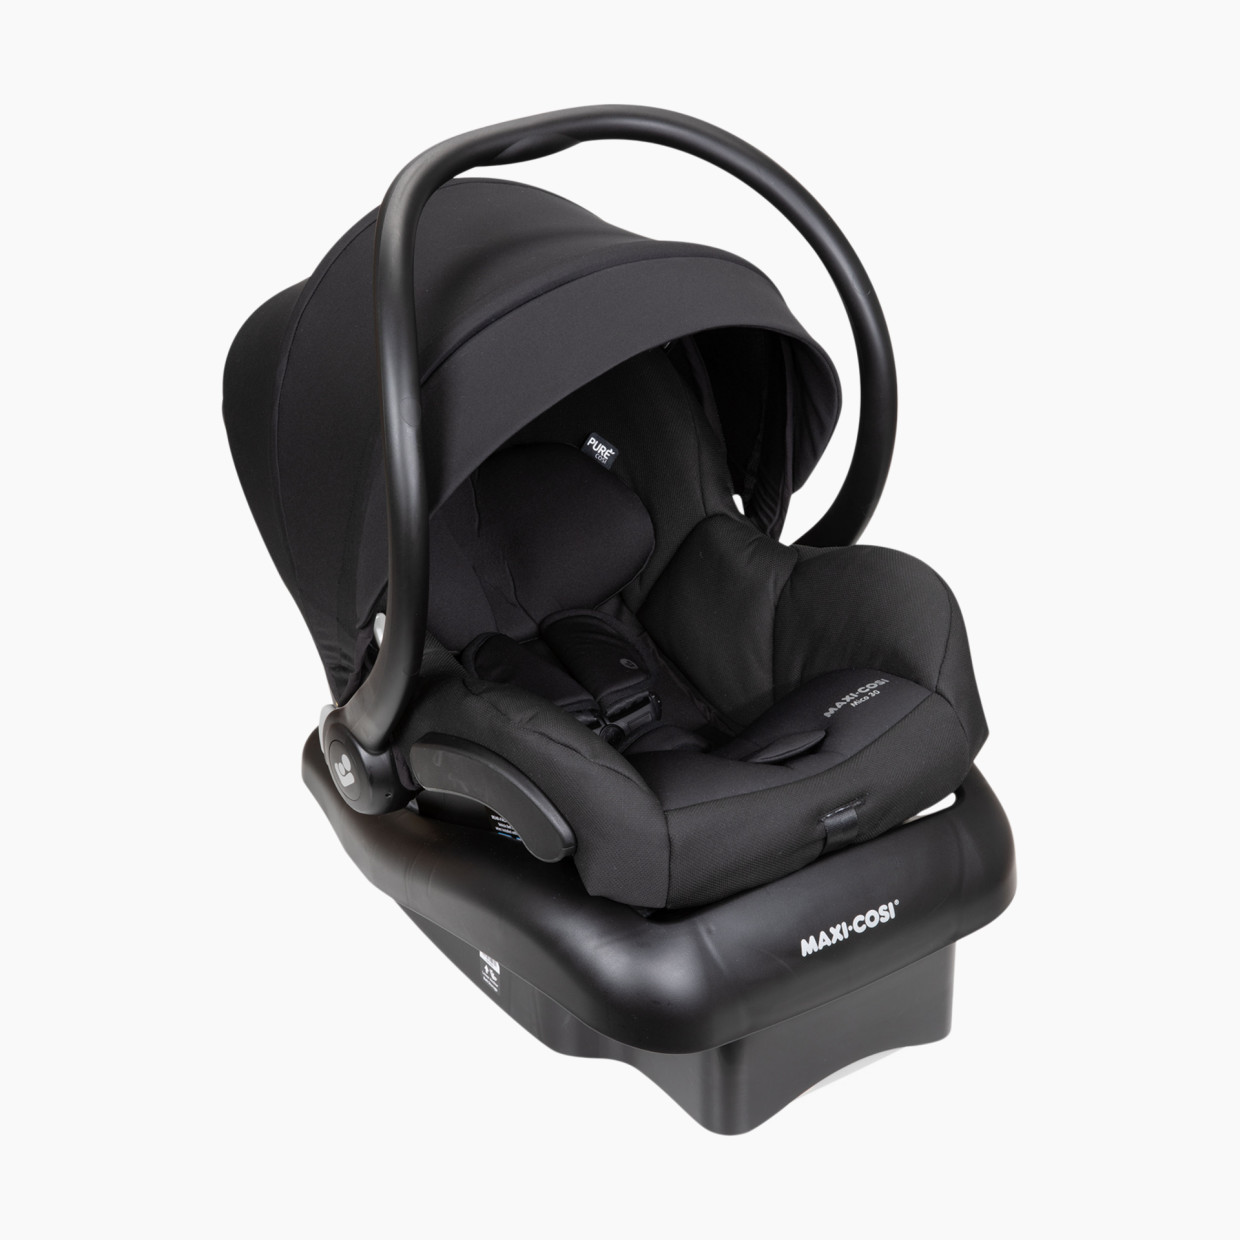 Maxi-Cosi Mico 30 Infant Car Seat - Midnight Black (Pure Cosi).